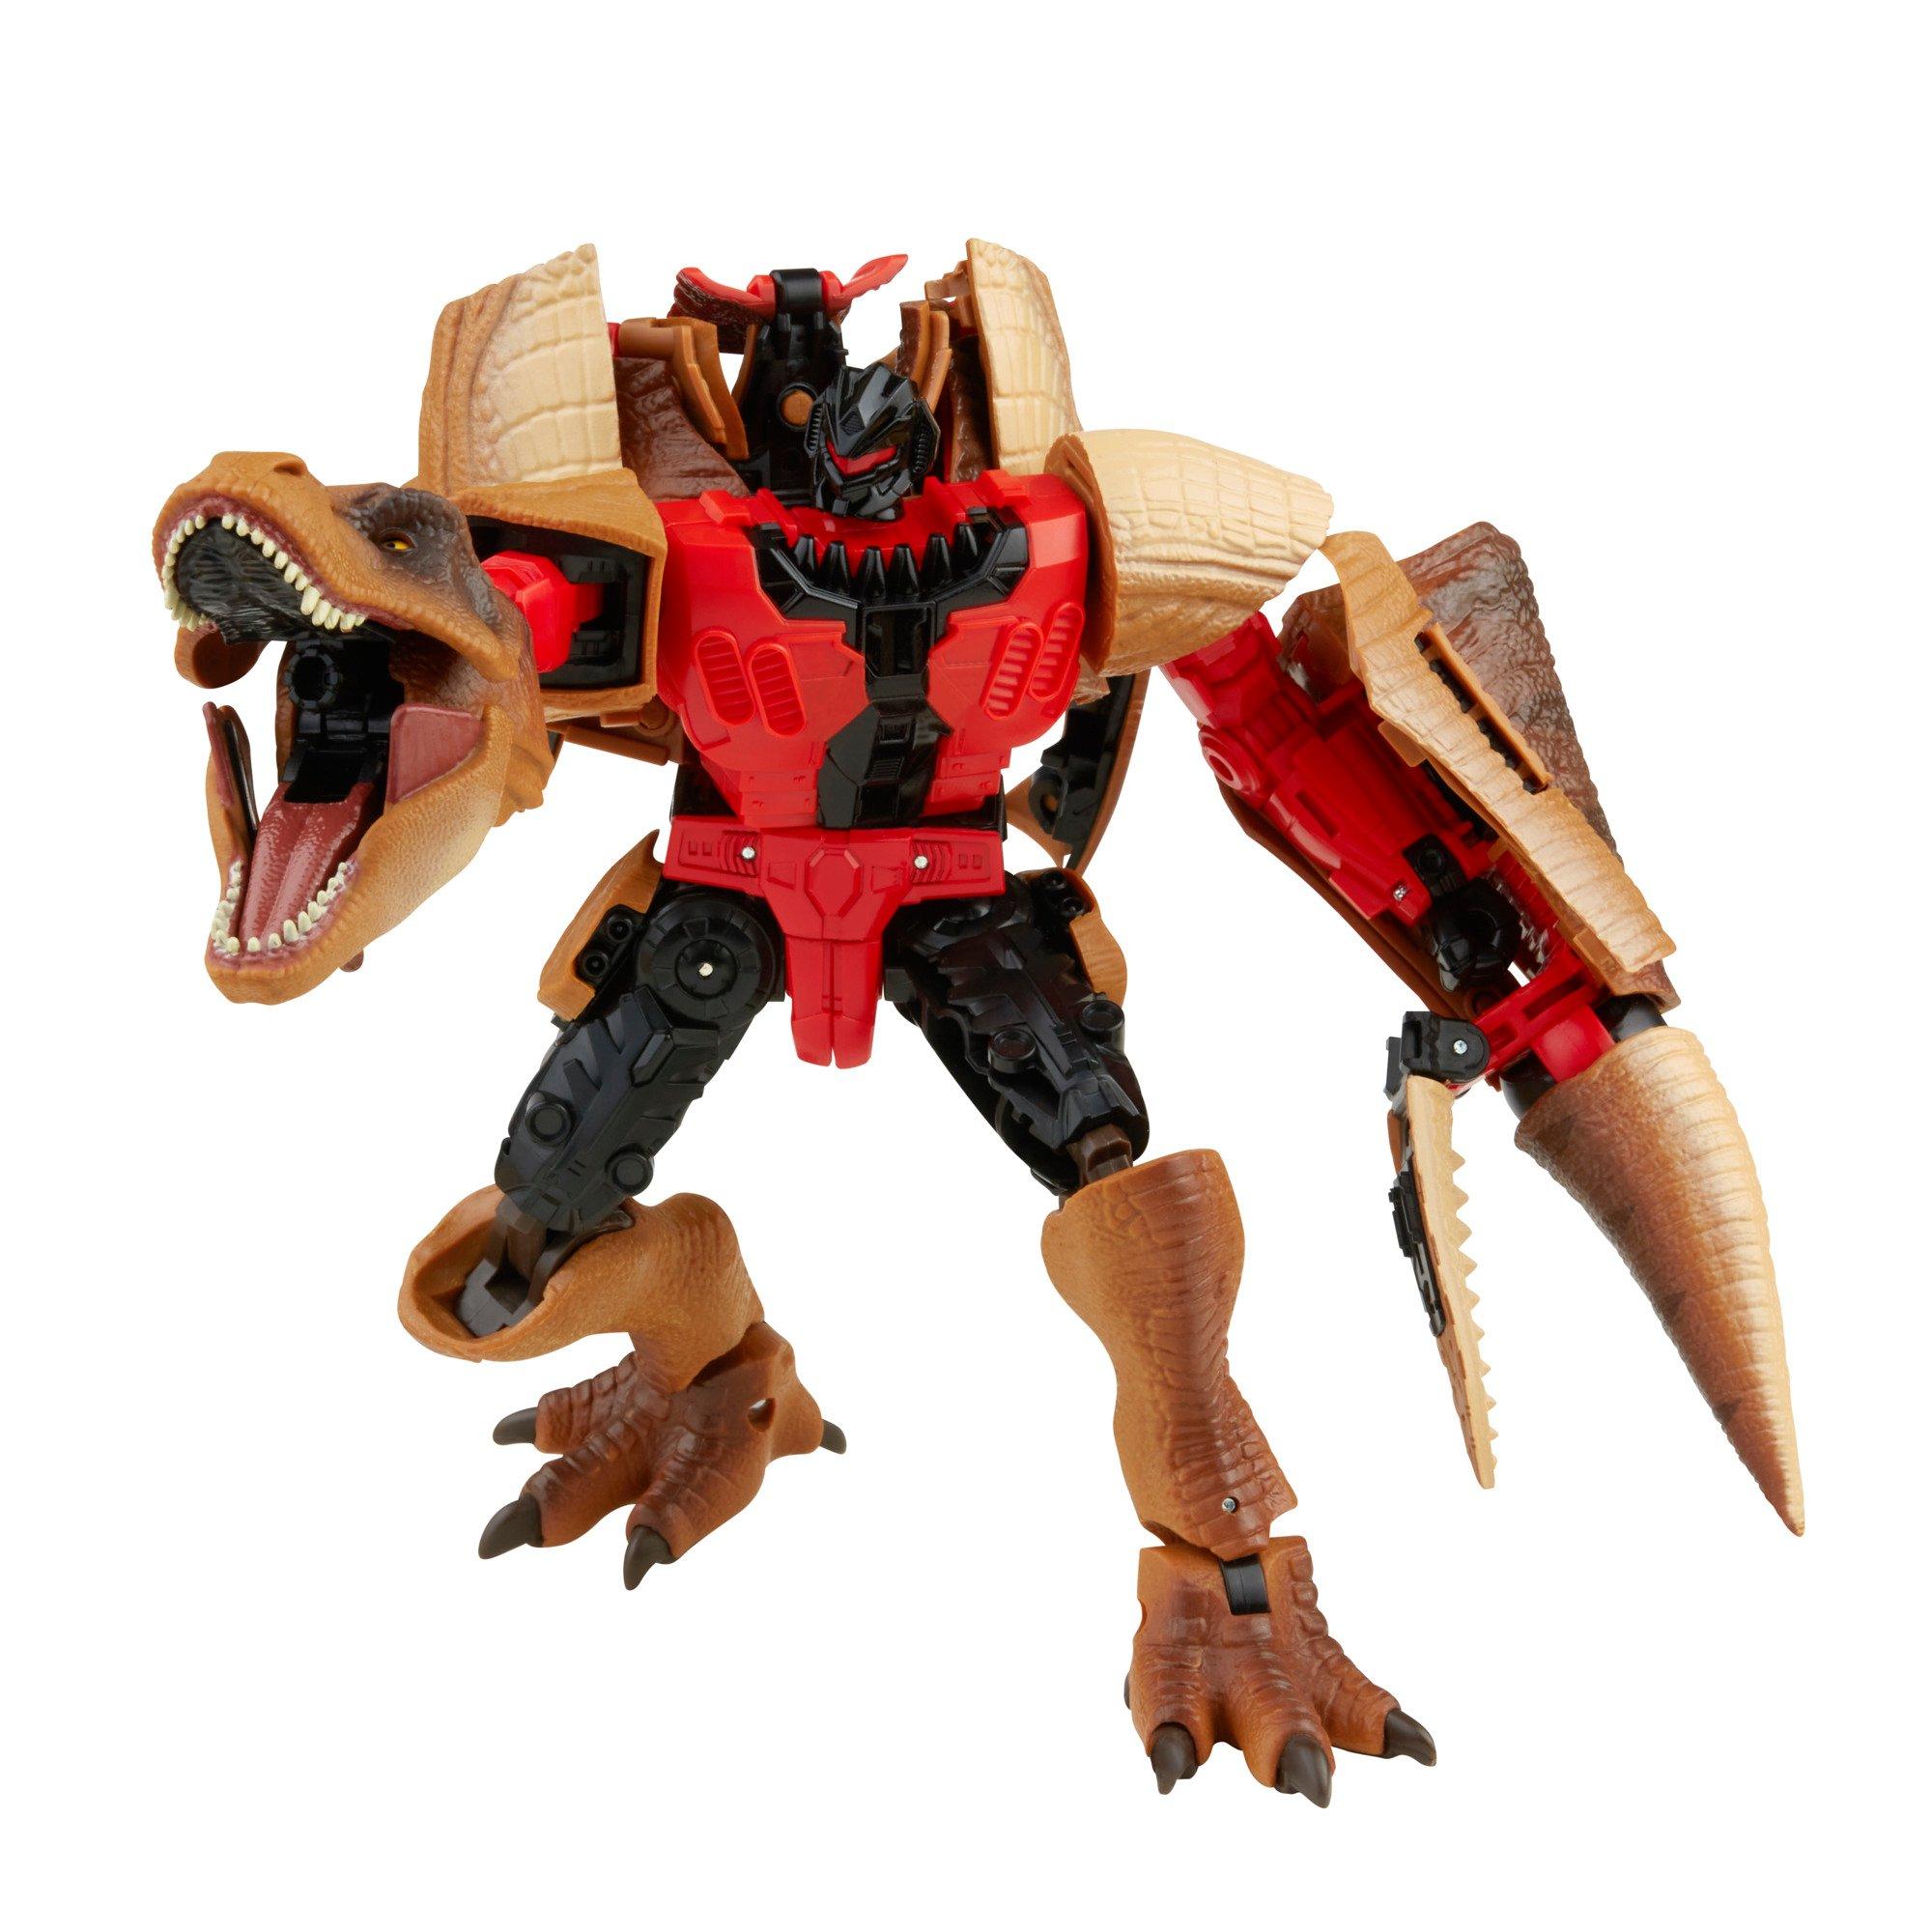 Hasbro Transformers Jurassic Park Mash-Up Tyrannocon Rex Autobot JP93 7-in Action Figure